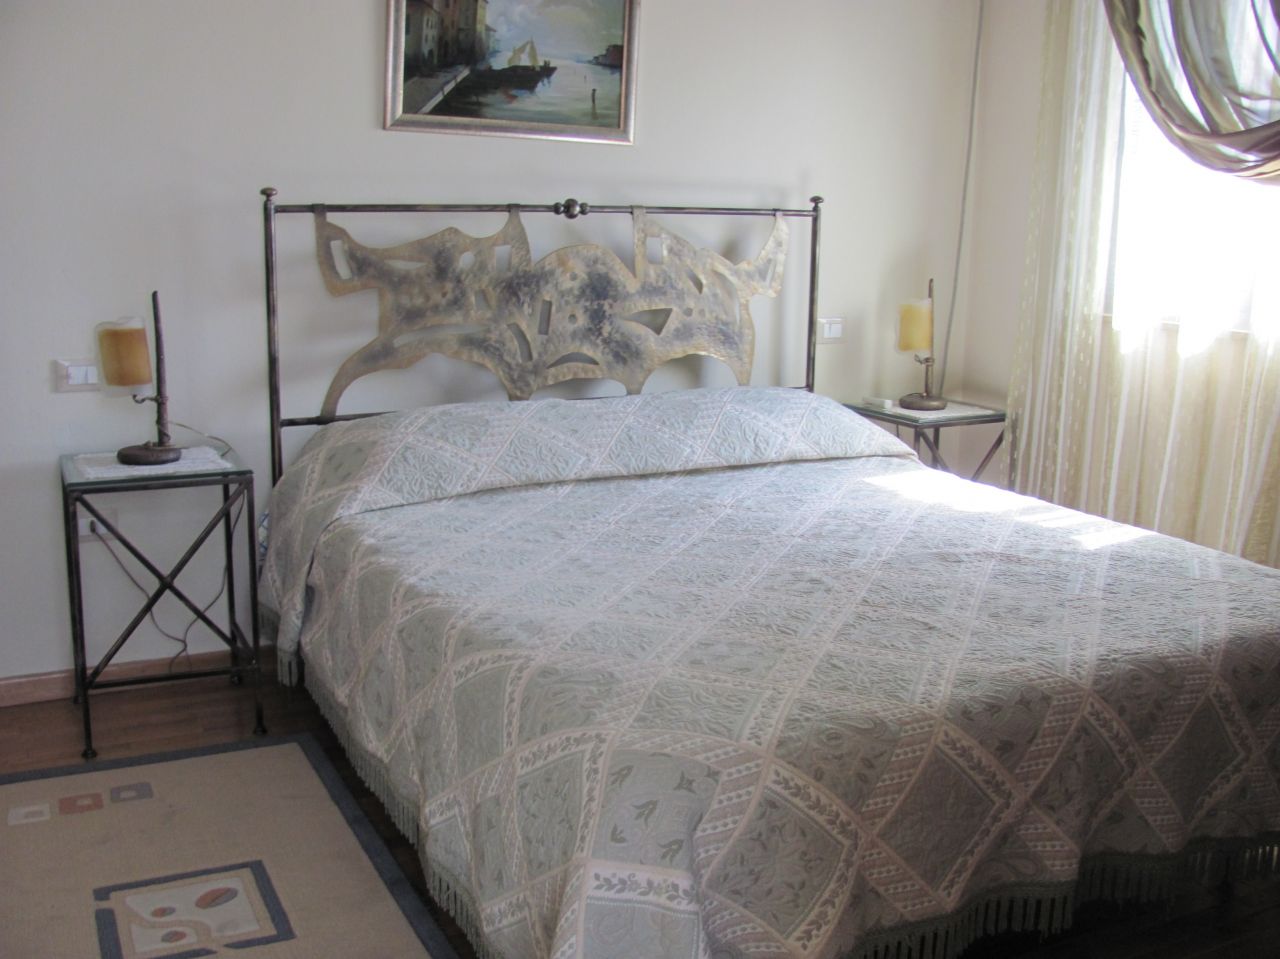 Three bedroom apartment for rent in a prestigious location in Tirana